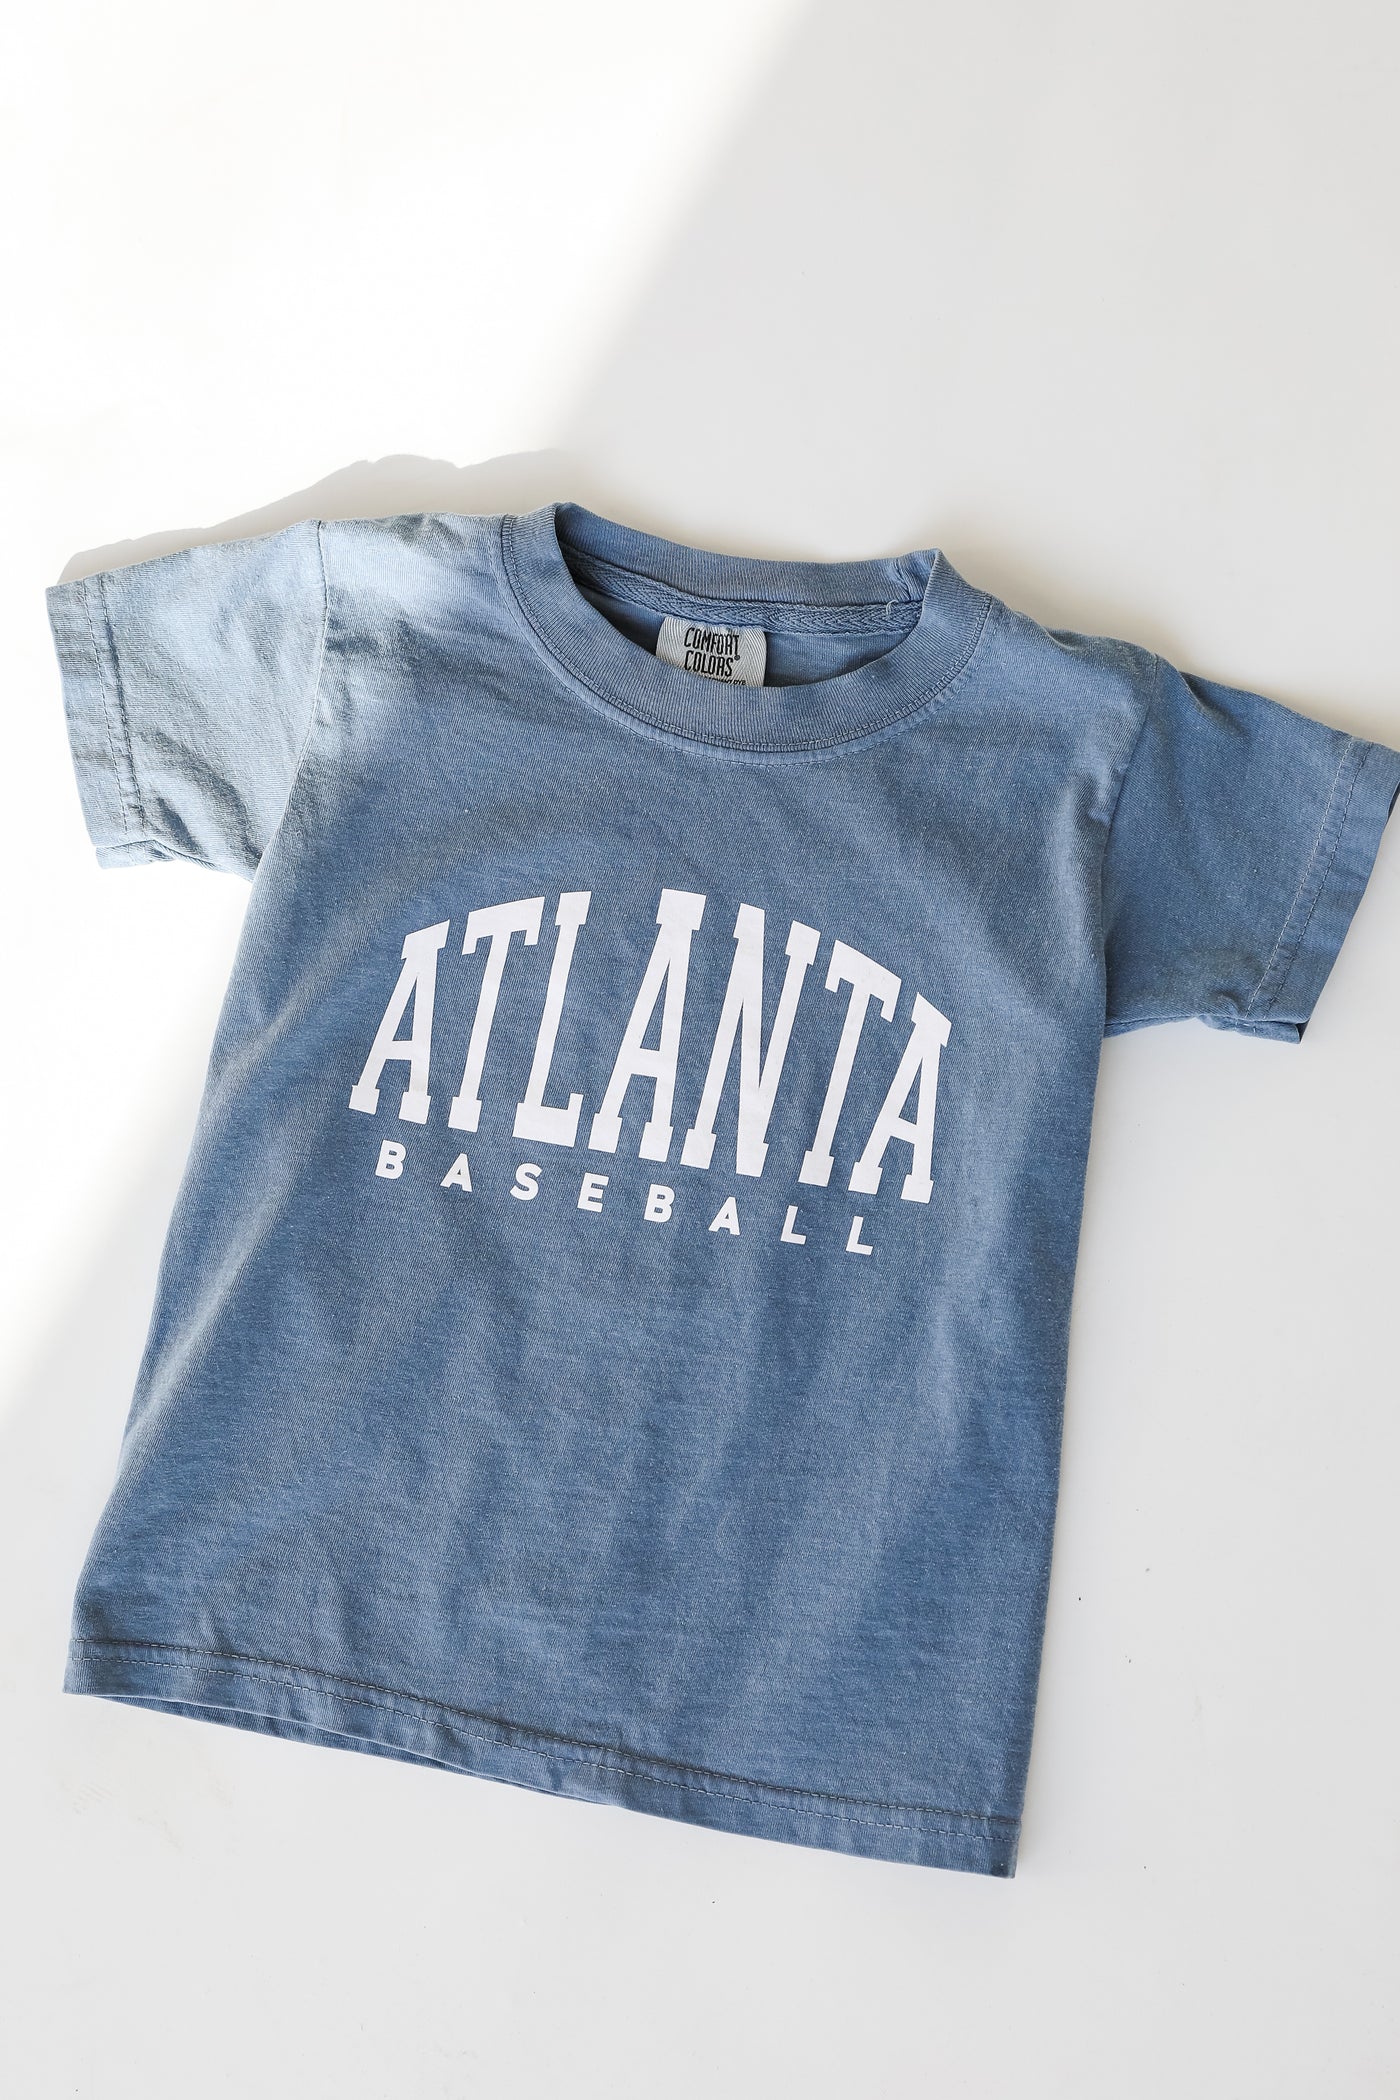 Youth Denim Atlanta Baseball Tee flat lay